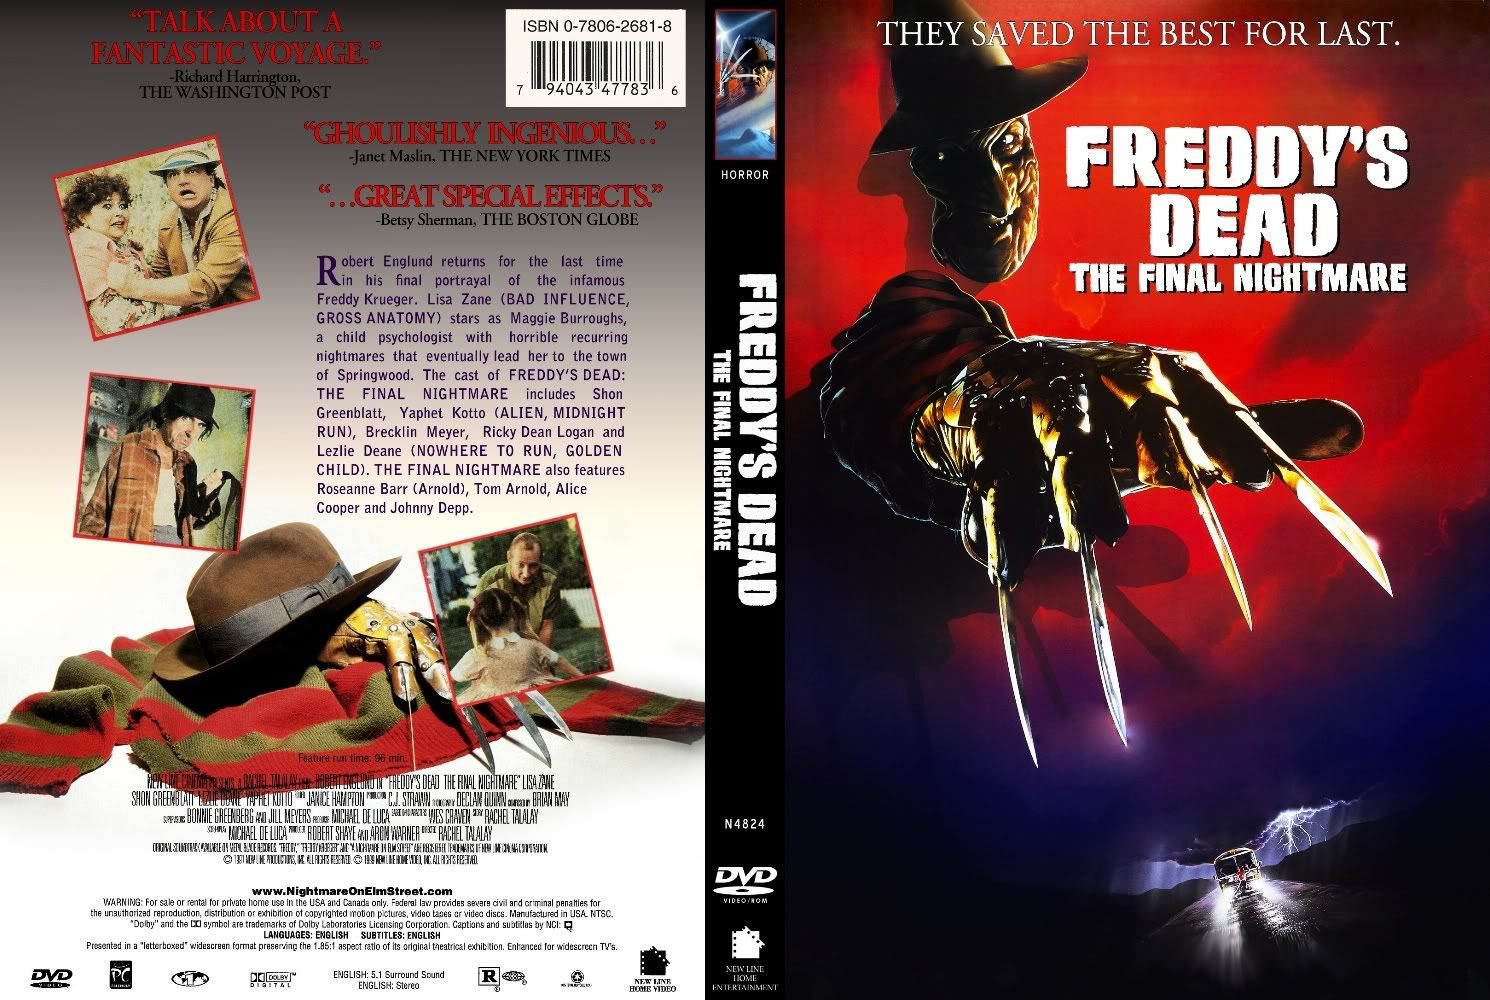 Nightmare on Elm Street Forum - Custom DVD COVERS!